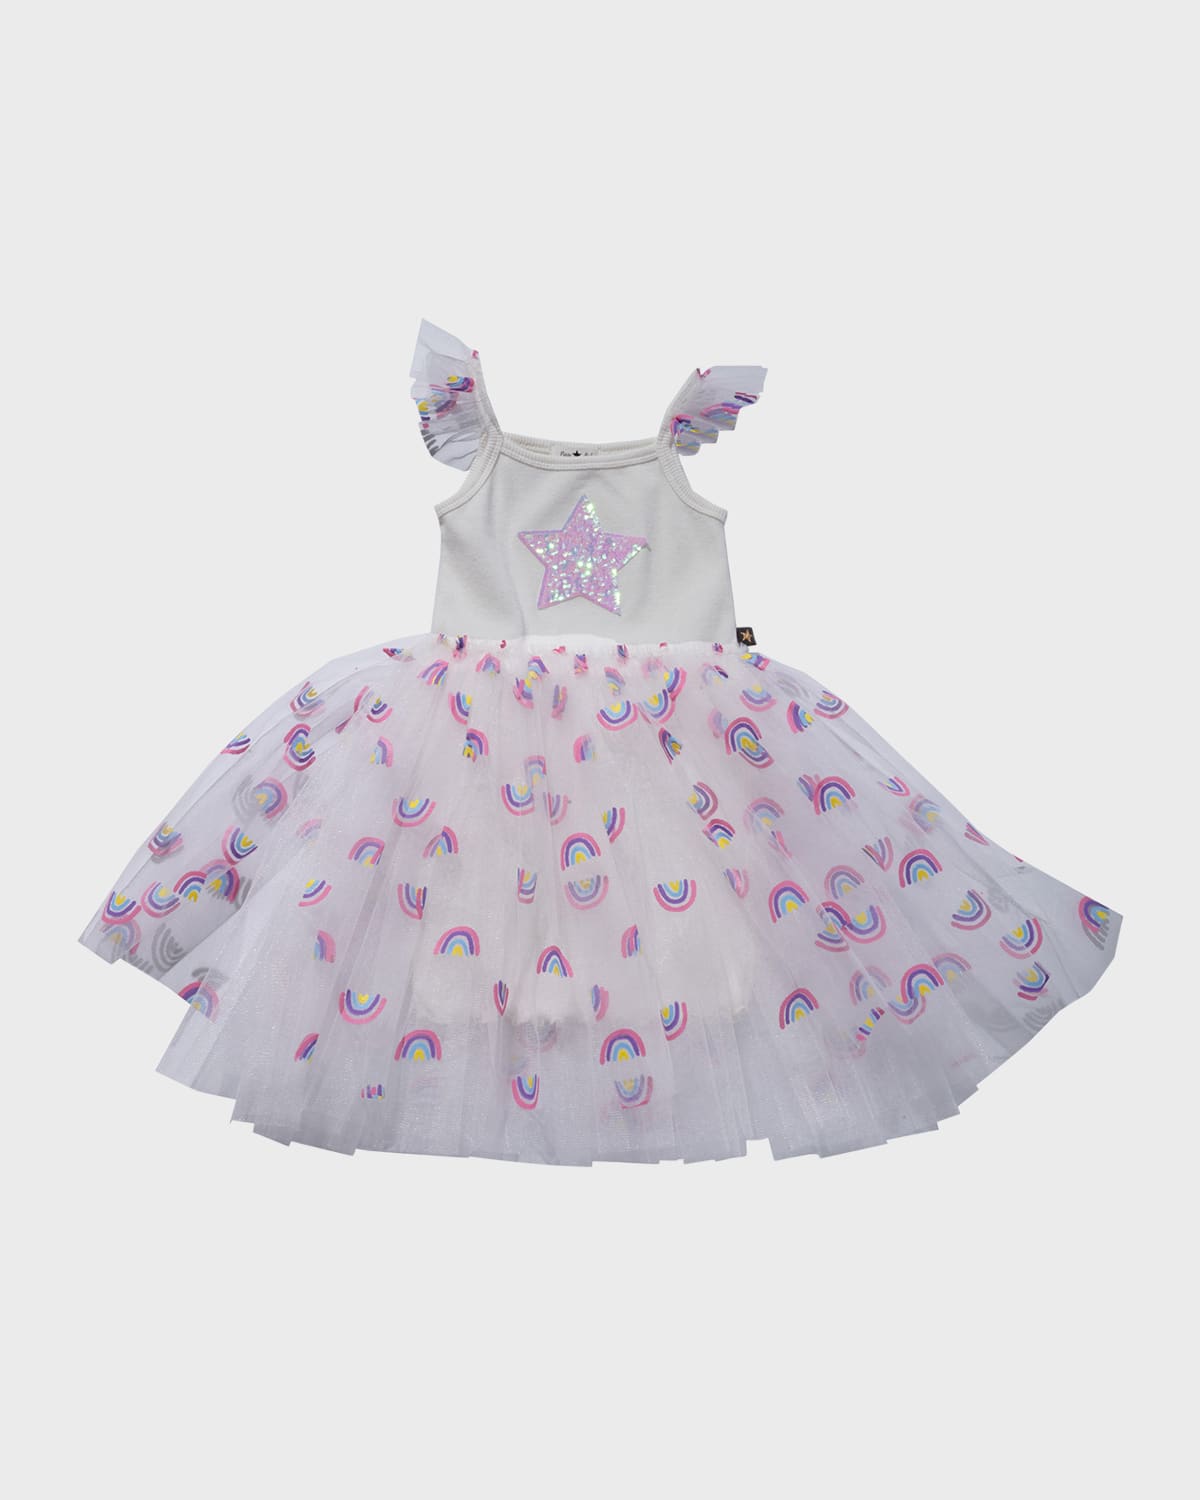 Girl's Sequin Star Rainbow-Print Frill Tutu Dress, Size 12M-6